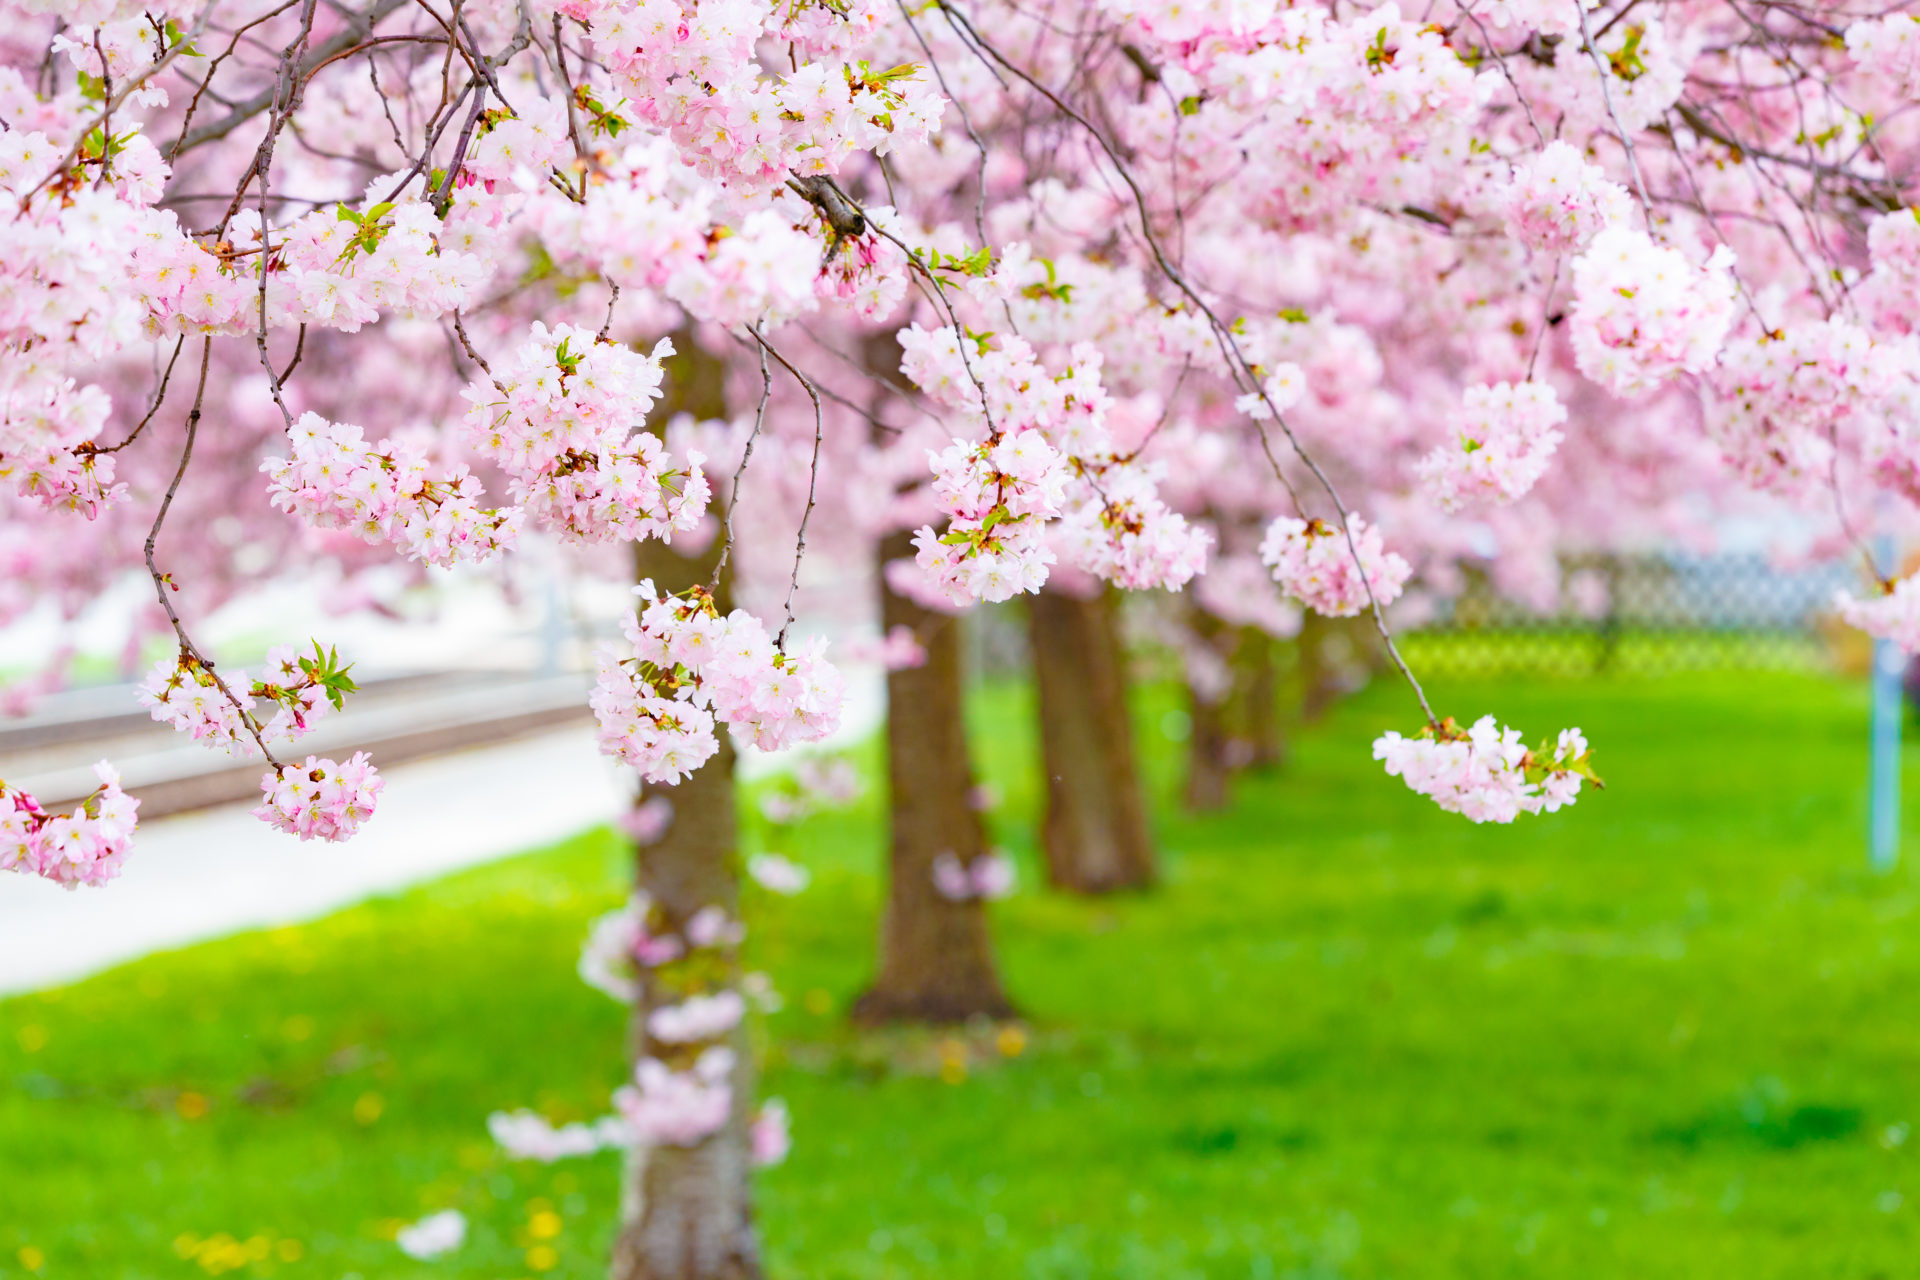 Pink Spring trees